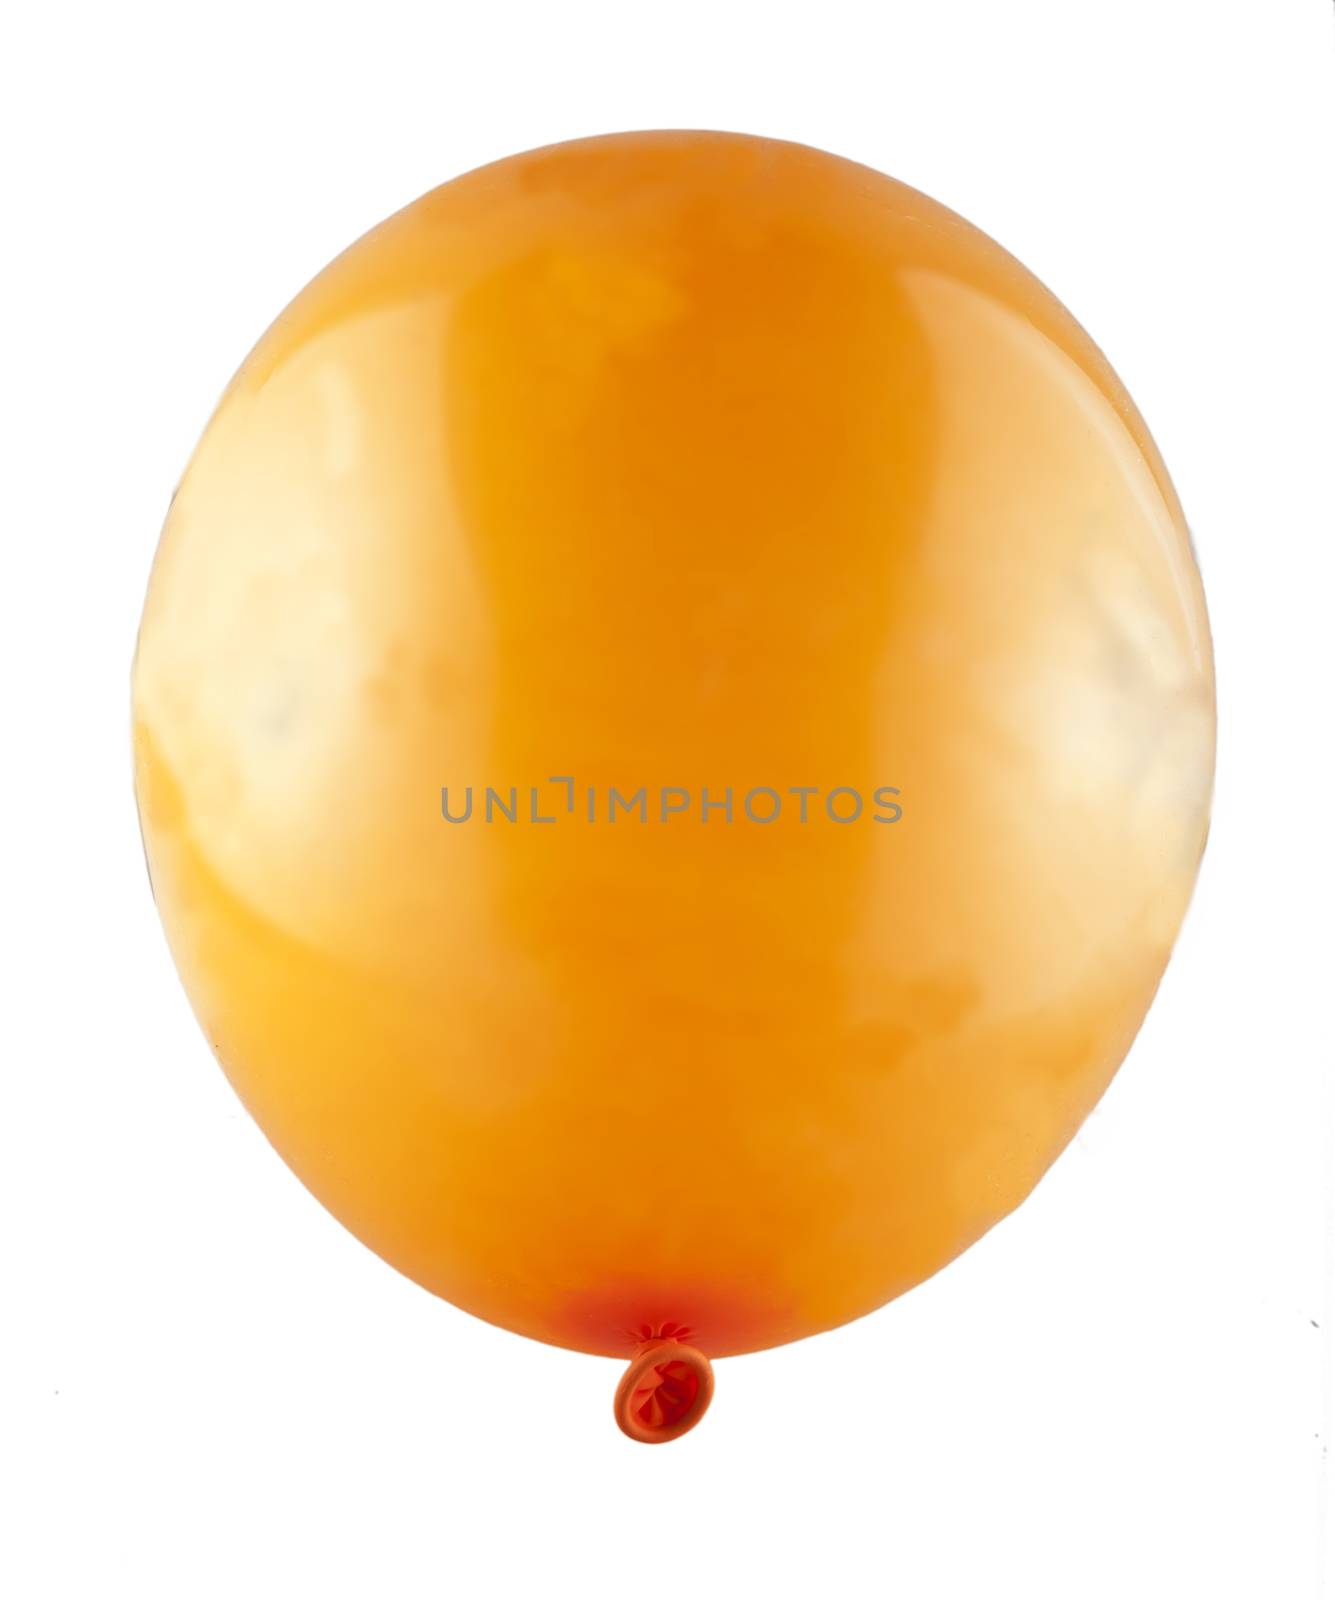 Balloon by Koufax73